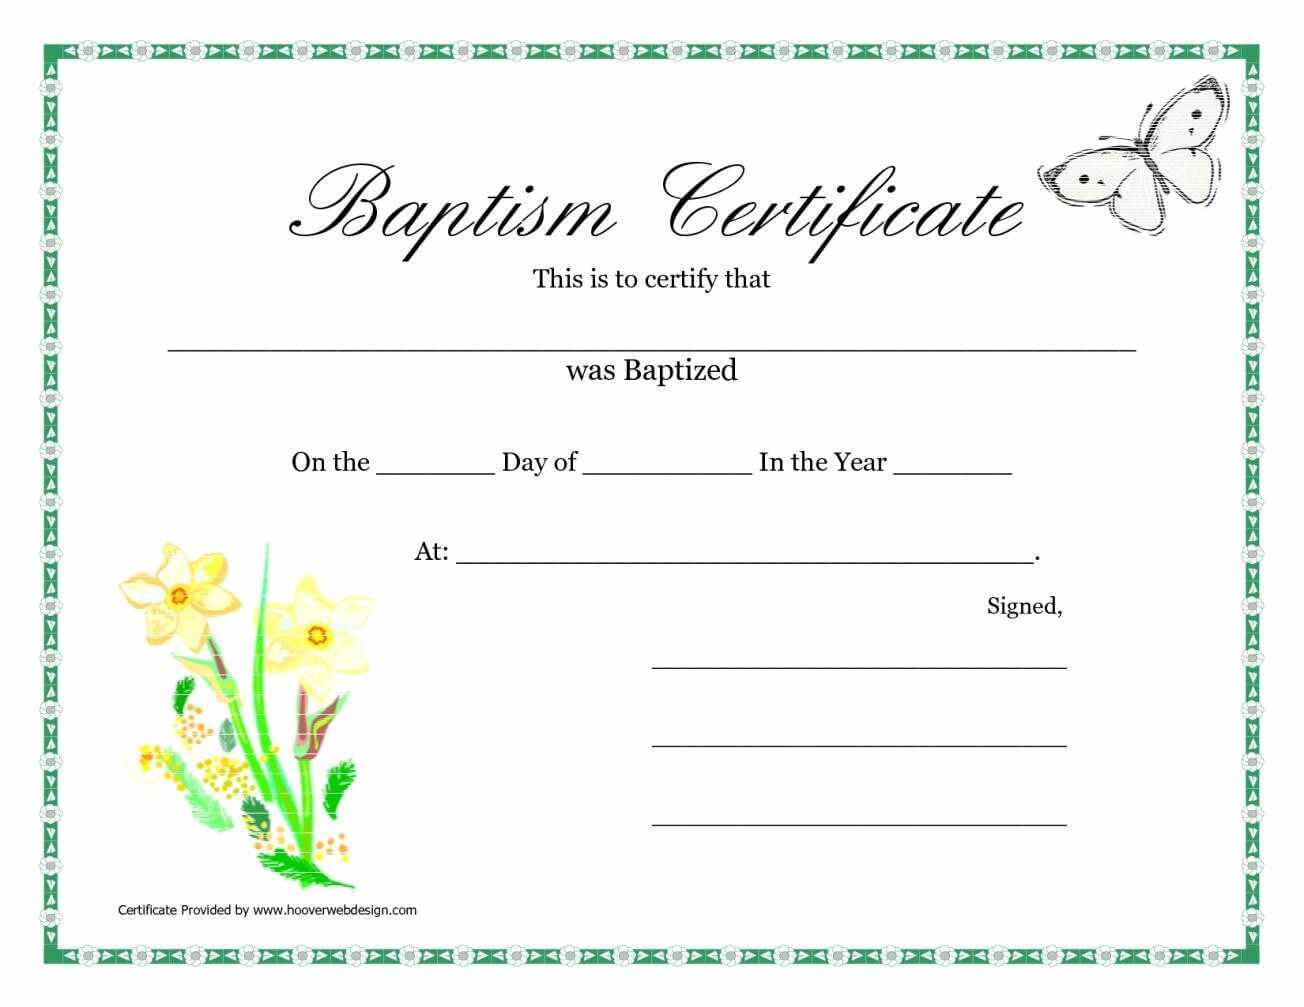 Sample Baptism Certificate Templates – Sample Certificate With Regard To Baptism Certificate Template Word